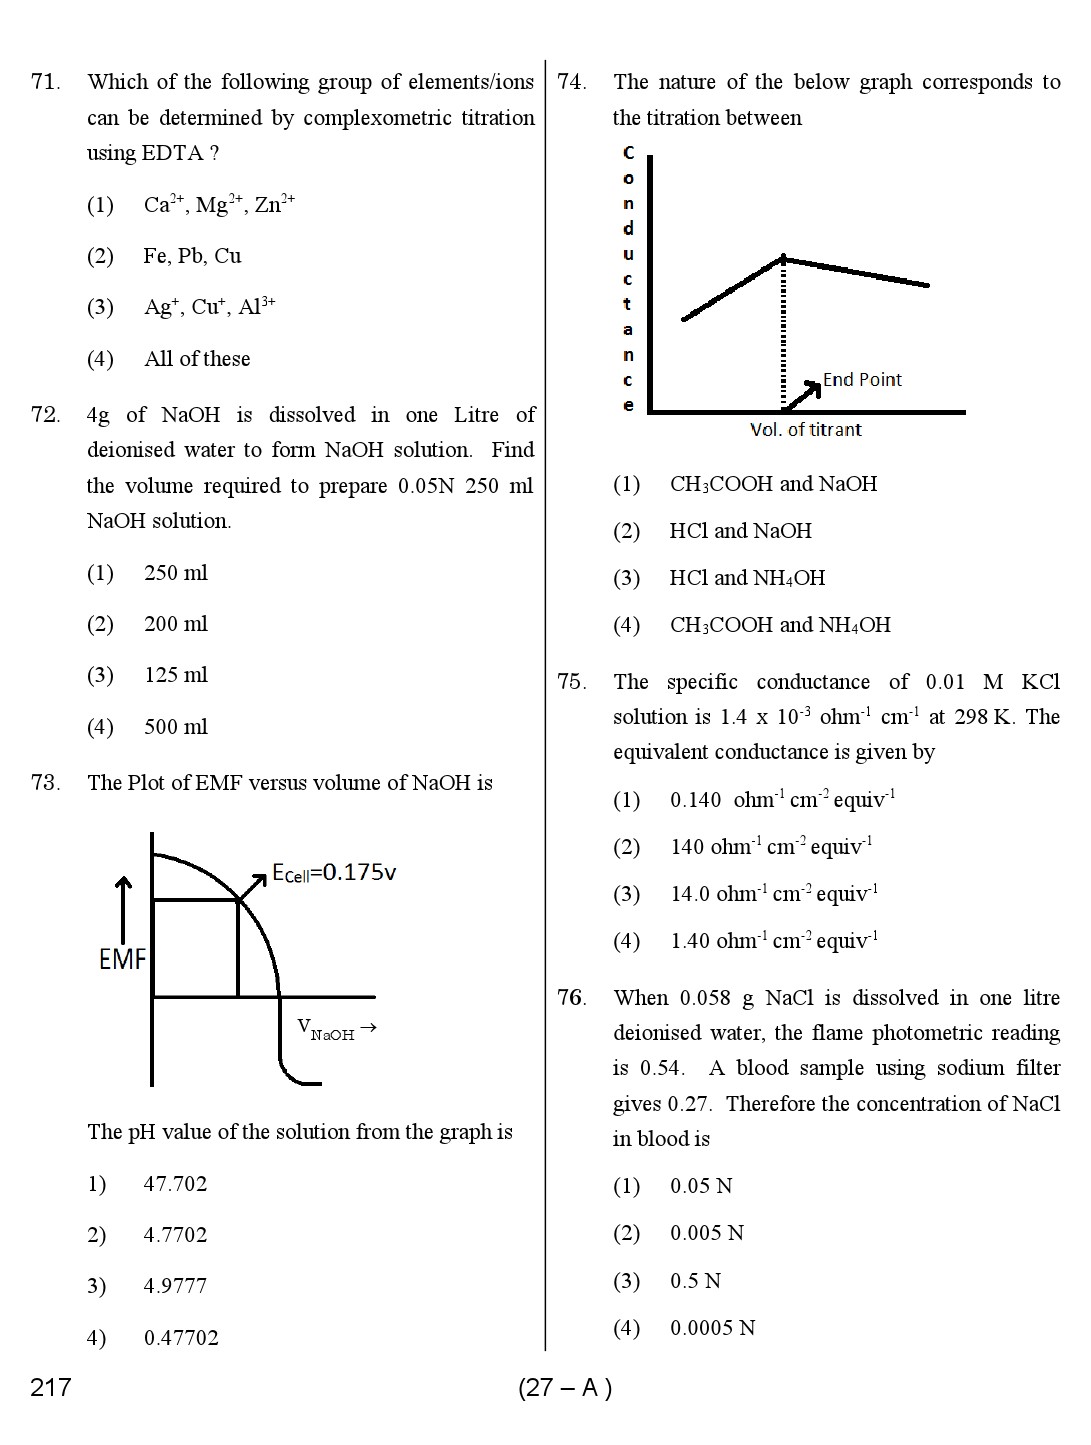 Karnataka PSC Chemist Exam Sample Question Paper 27